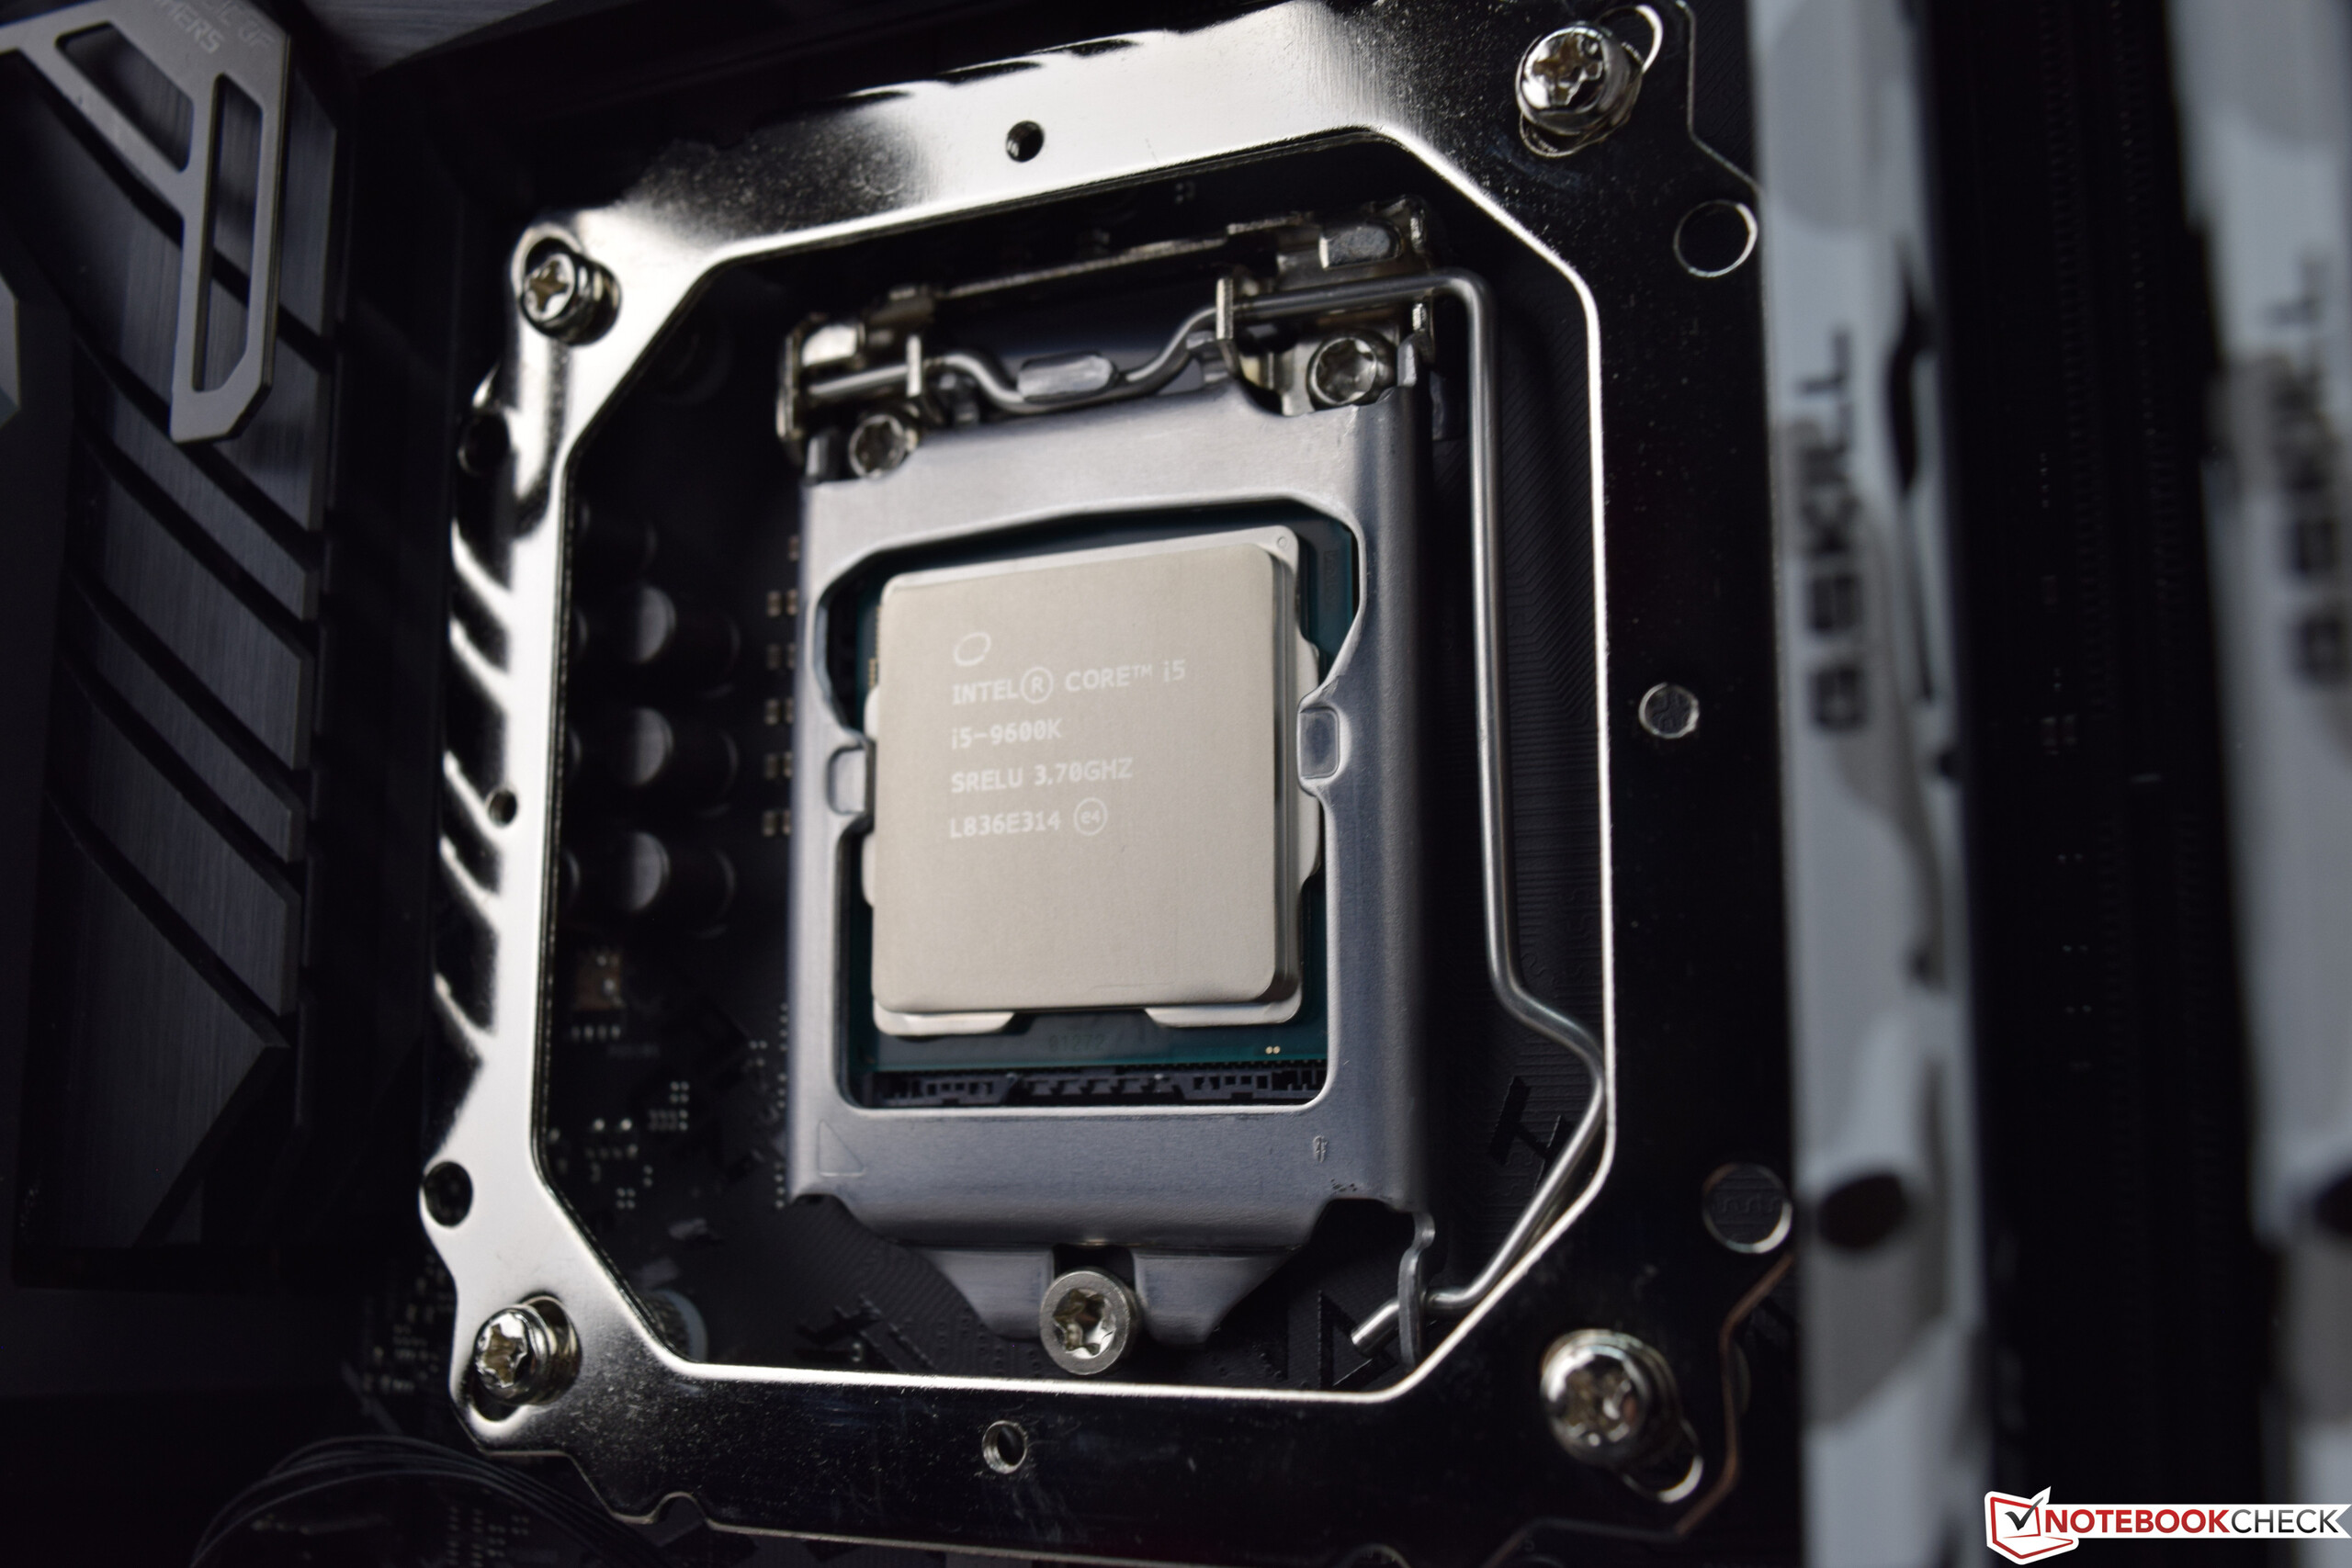 Intel Core i5-9600K Desktop CPU Review - NotebookCheck.net Reviews